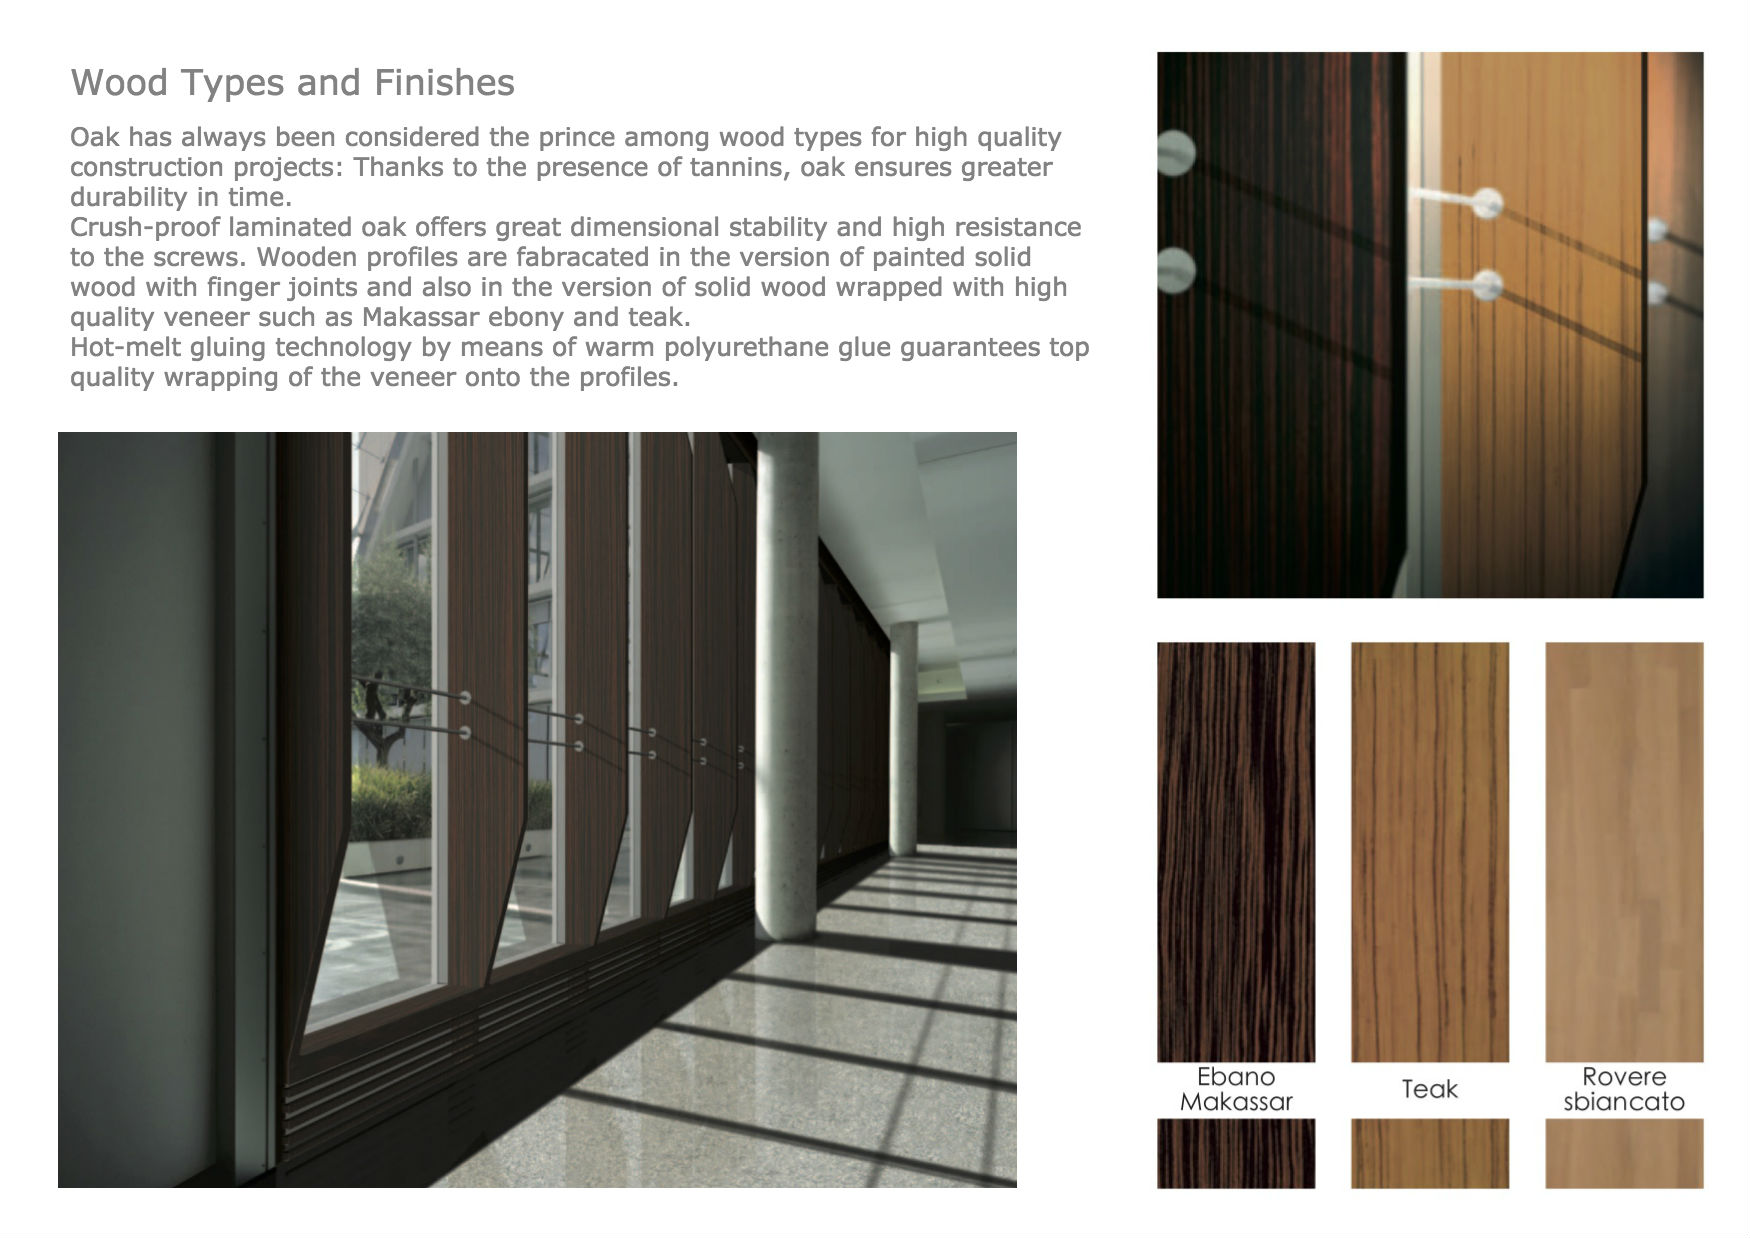 Wood-Aluminum Curtain Wall Systems